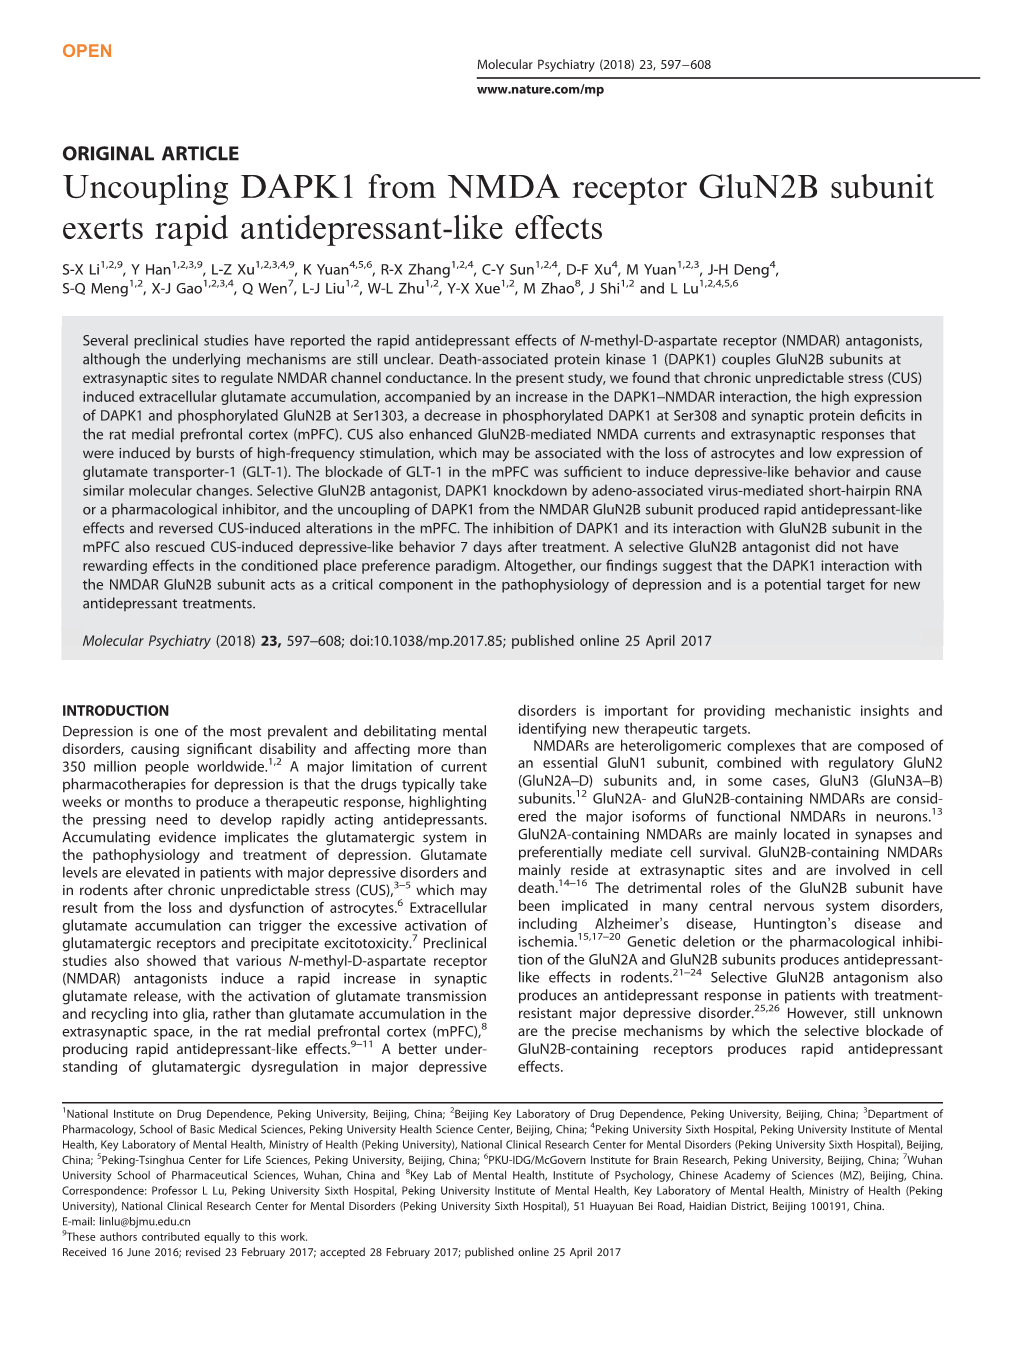 Uncoupling DAPK1 from NMDA Receptor Glun2b Subunit Exerts Rapid Antidepressant-Like Effects